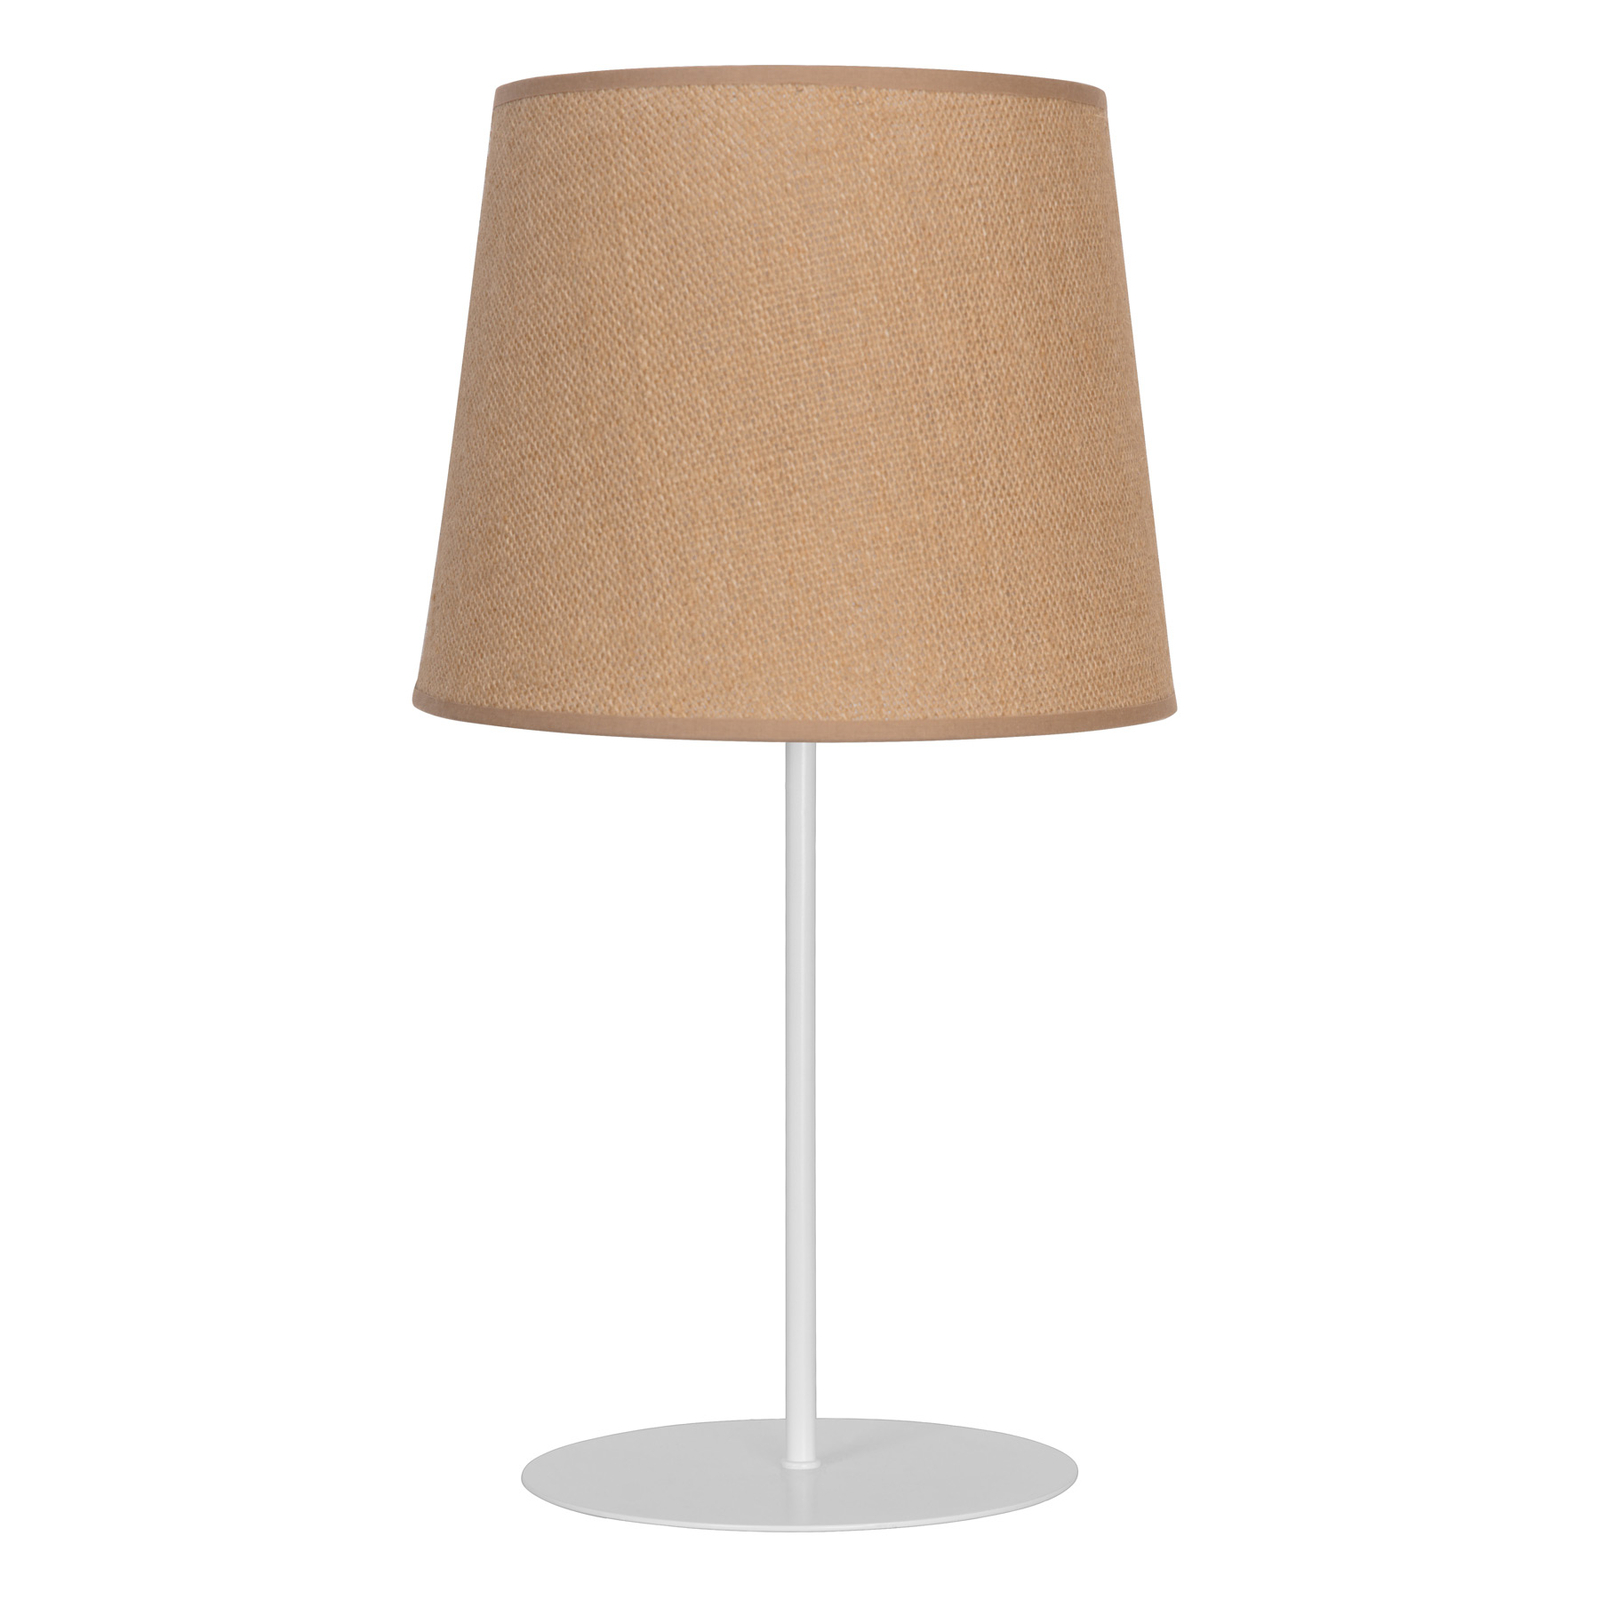 Pöytälamppu Jute, ruskea, korkeus 50 cm